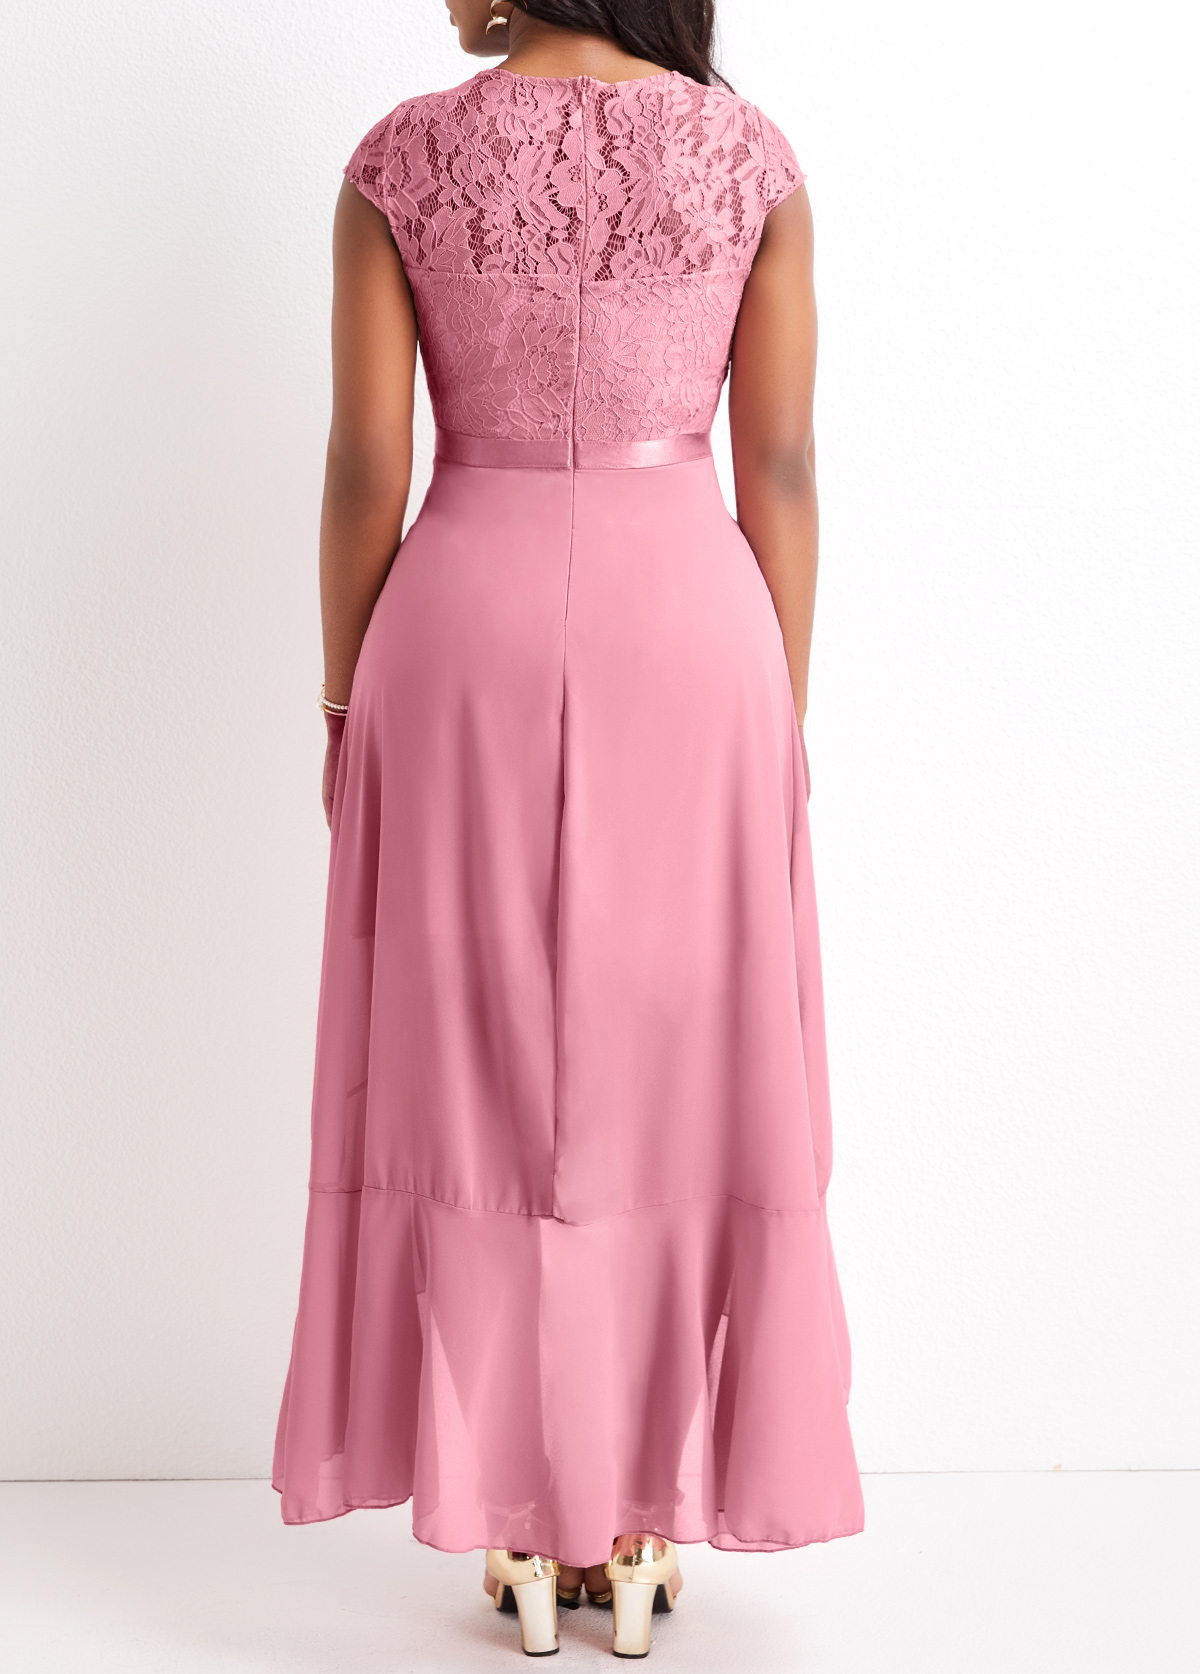 Pink Lace Plus Size High Low Dress